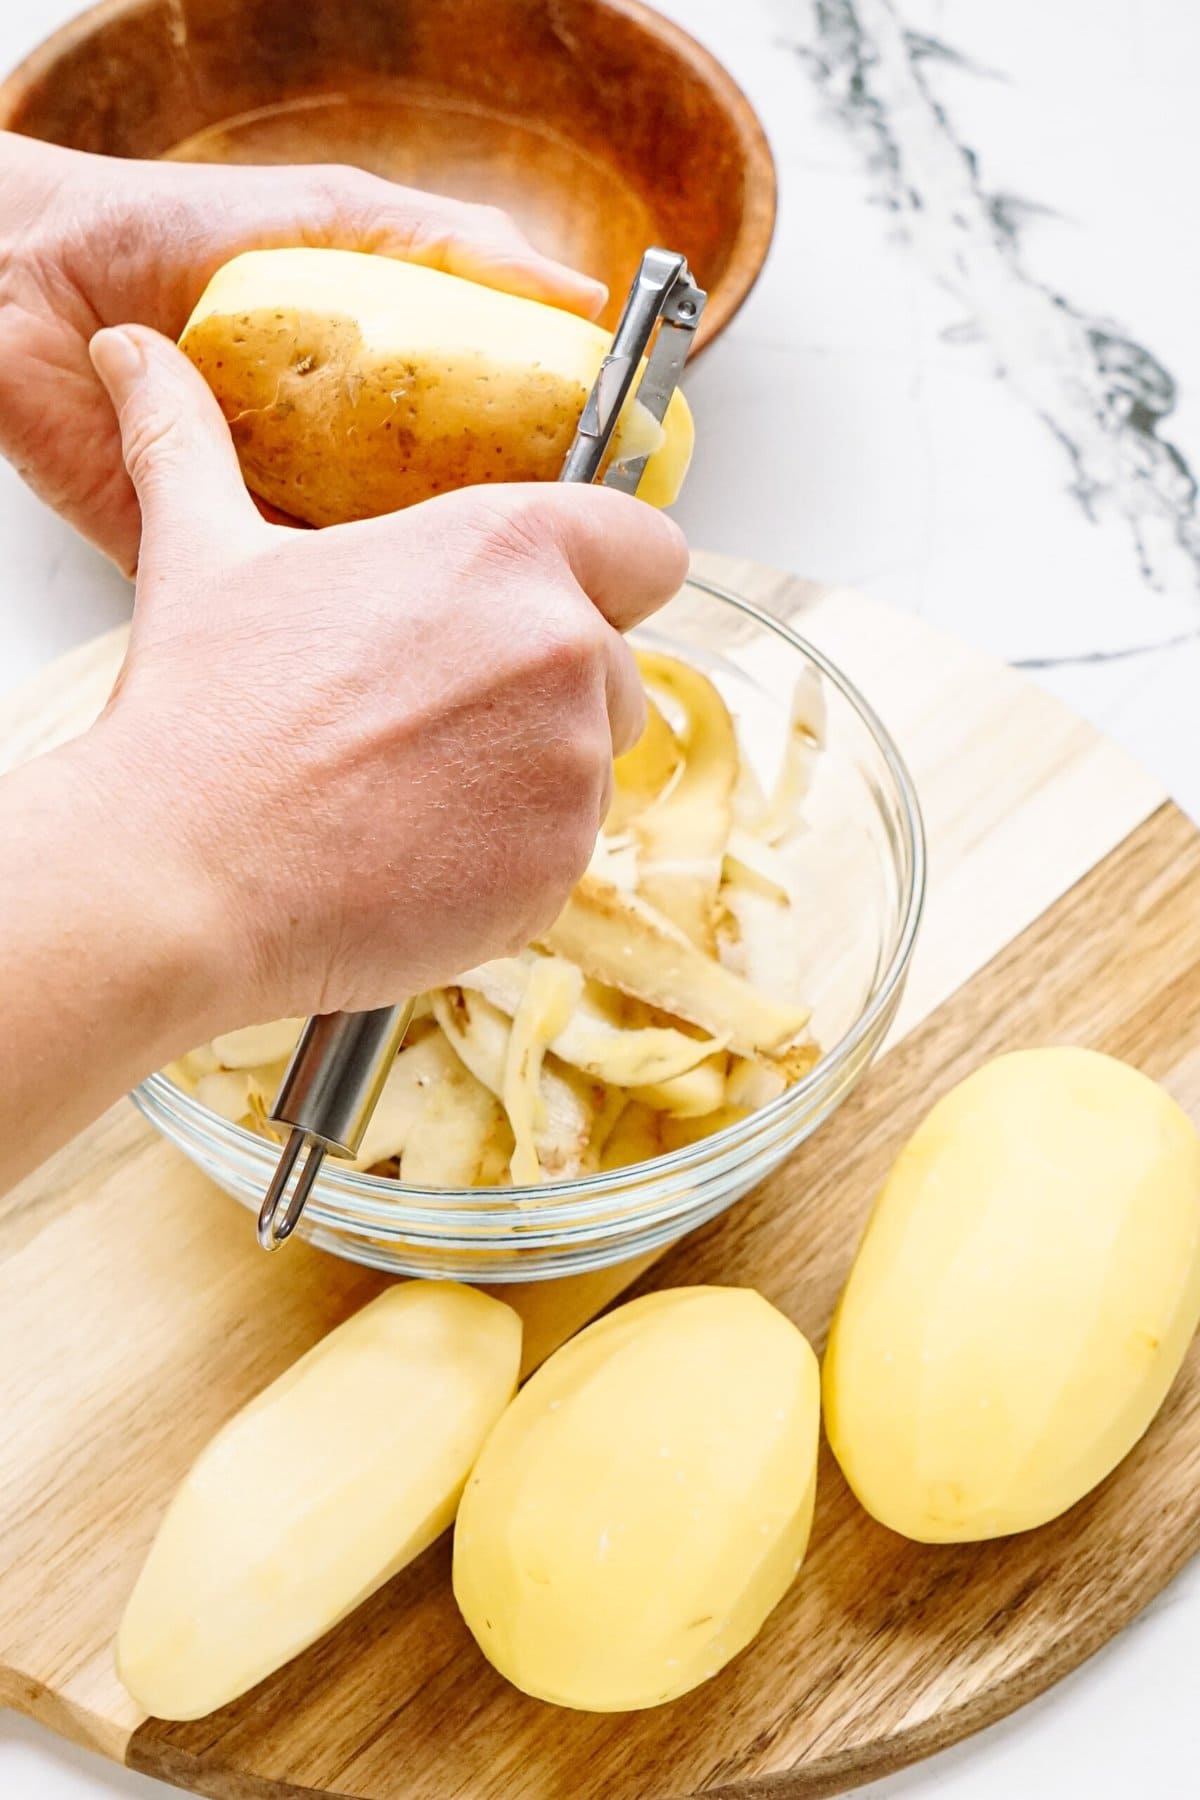 a person peeling potatoes